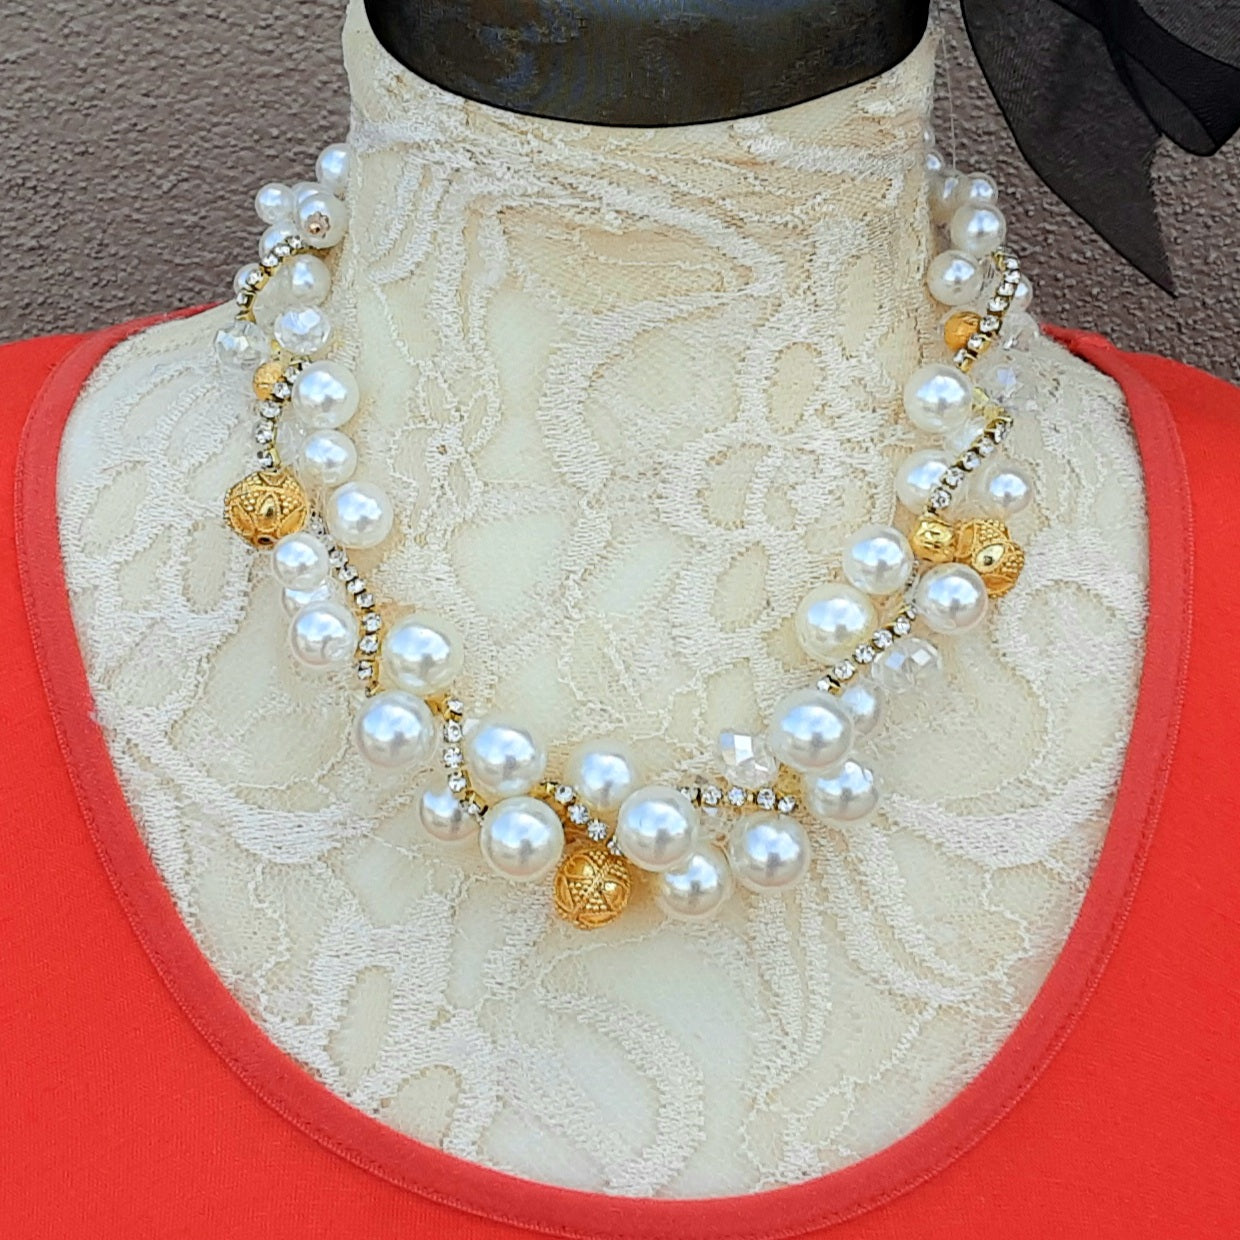 Buy Crystal Rhinestone Statement Necklace, Vintage Chunky Chain Choker  Collar Bib Statement Necklace Fashion Costume Jewelry Necklaces for Women…,  Rhinestone, Rhinestone at Amazon.in